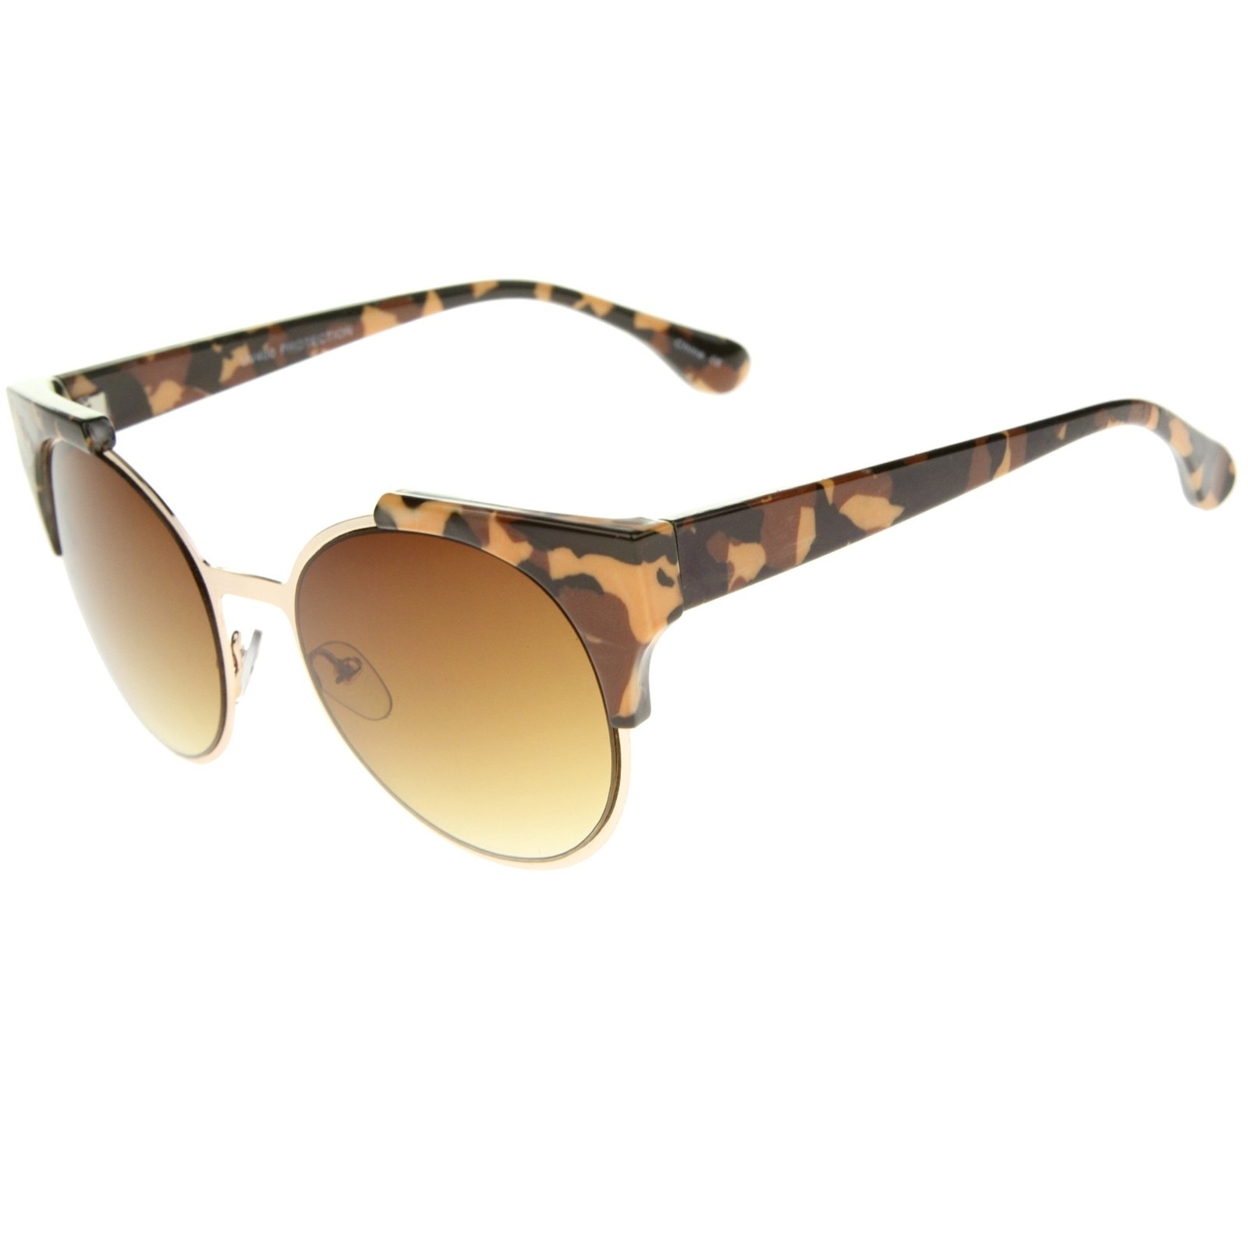 Modern Semi-Rimless Corner Horn Rimmed Round Sunglasses 53mm - Brown Camo-Gold / Amber